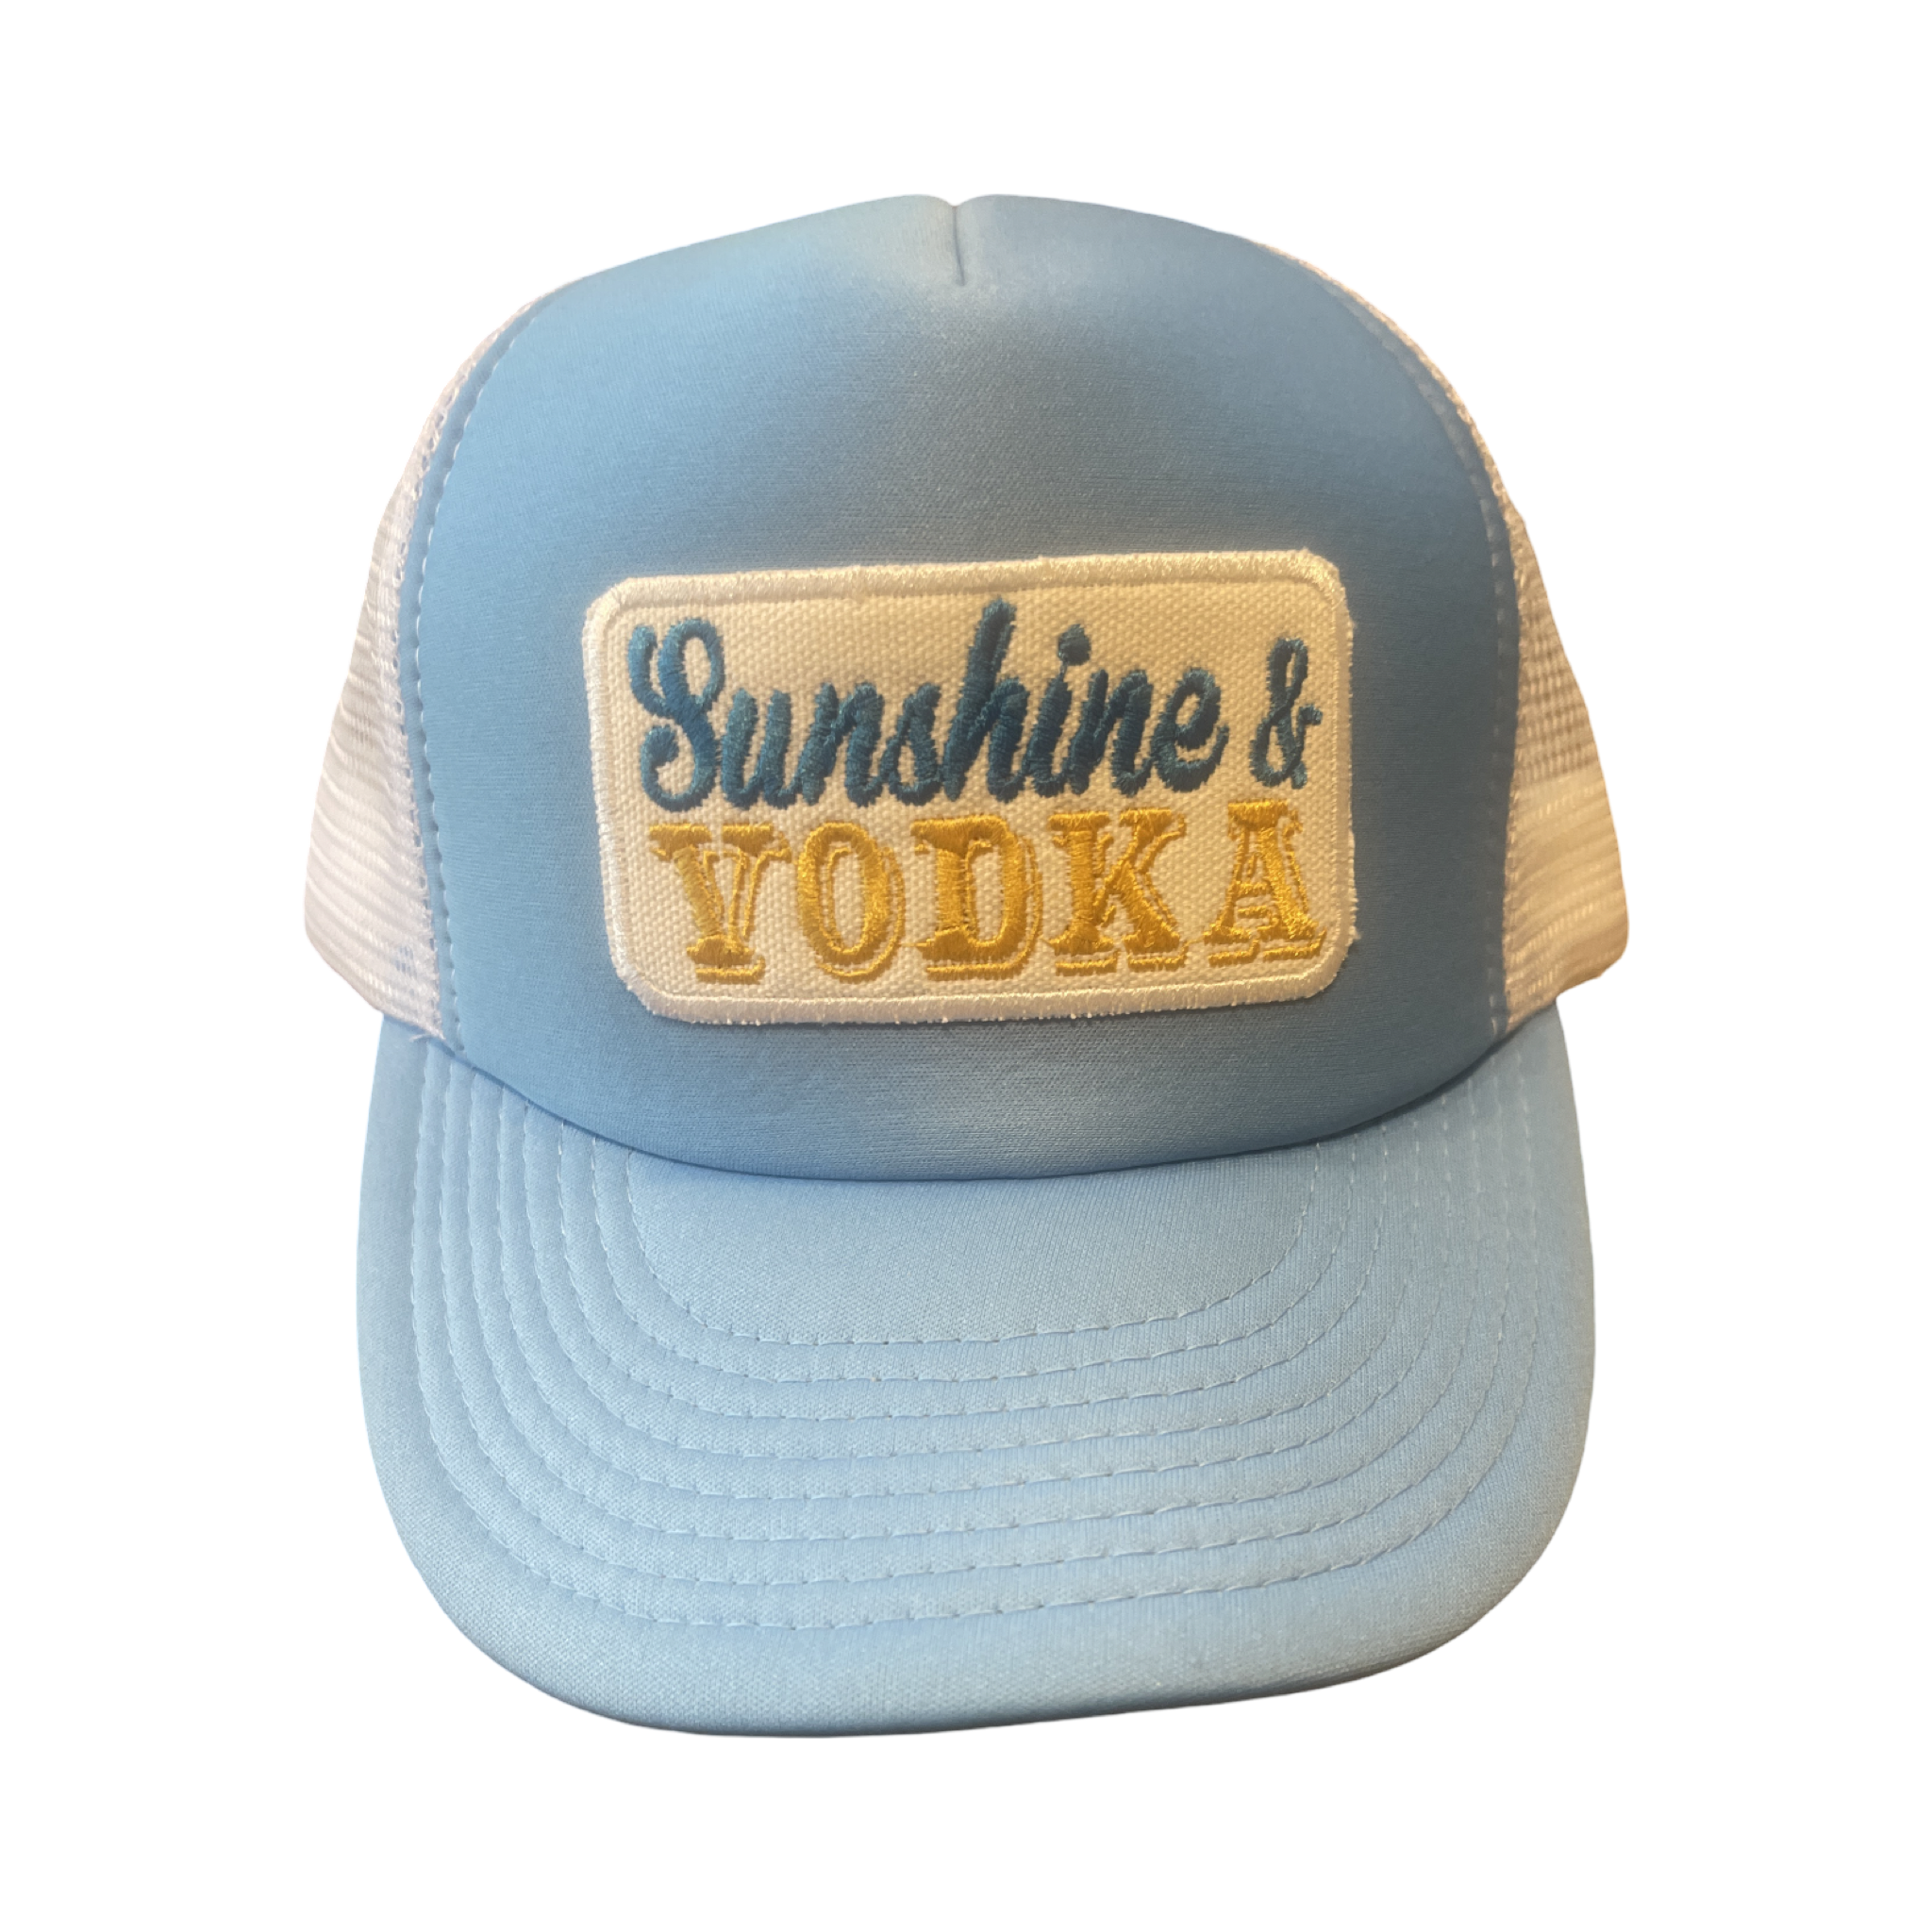 Trucker Hat Foam "Sunshine & Vodka"